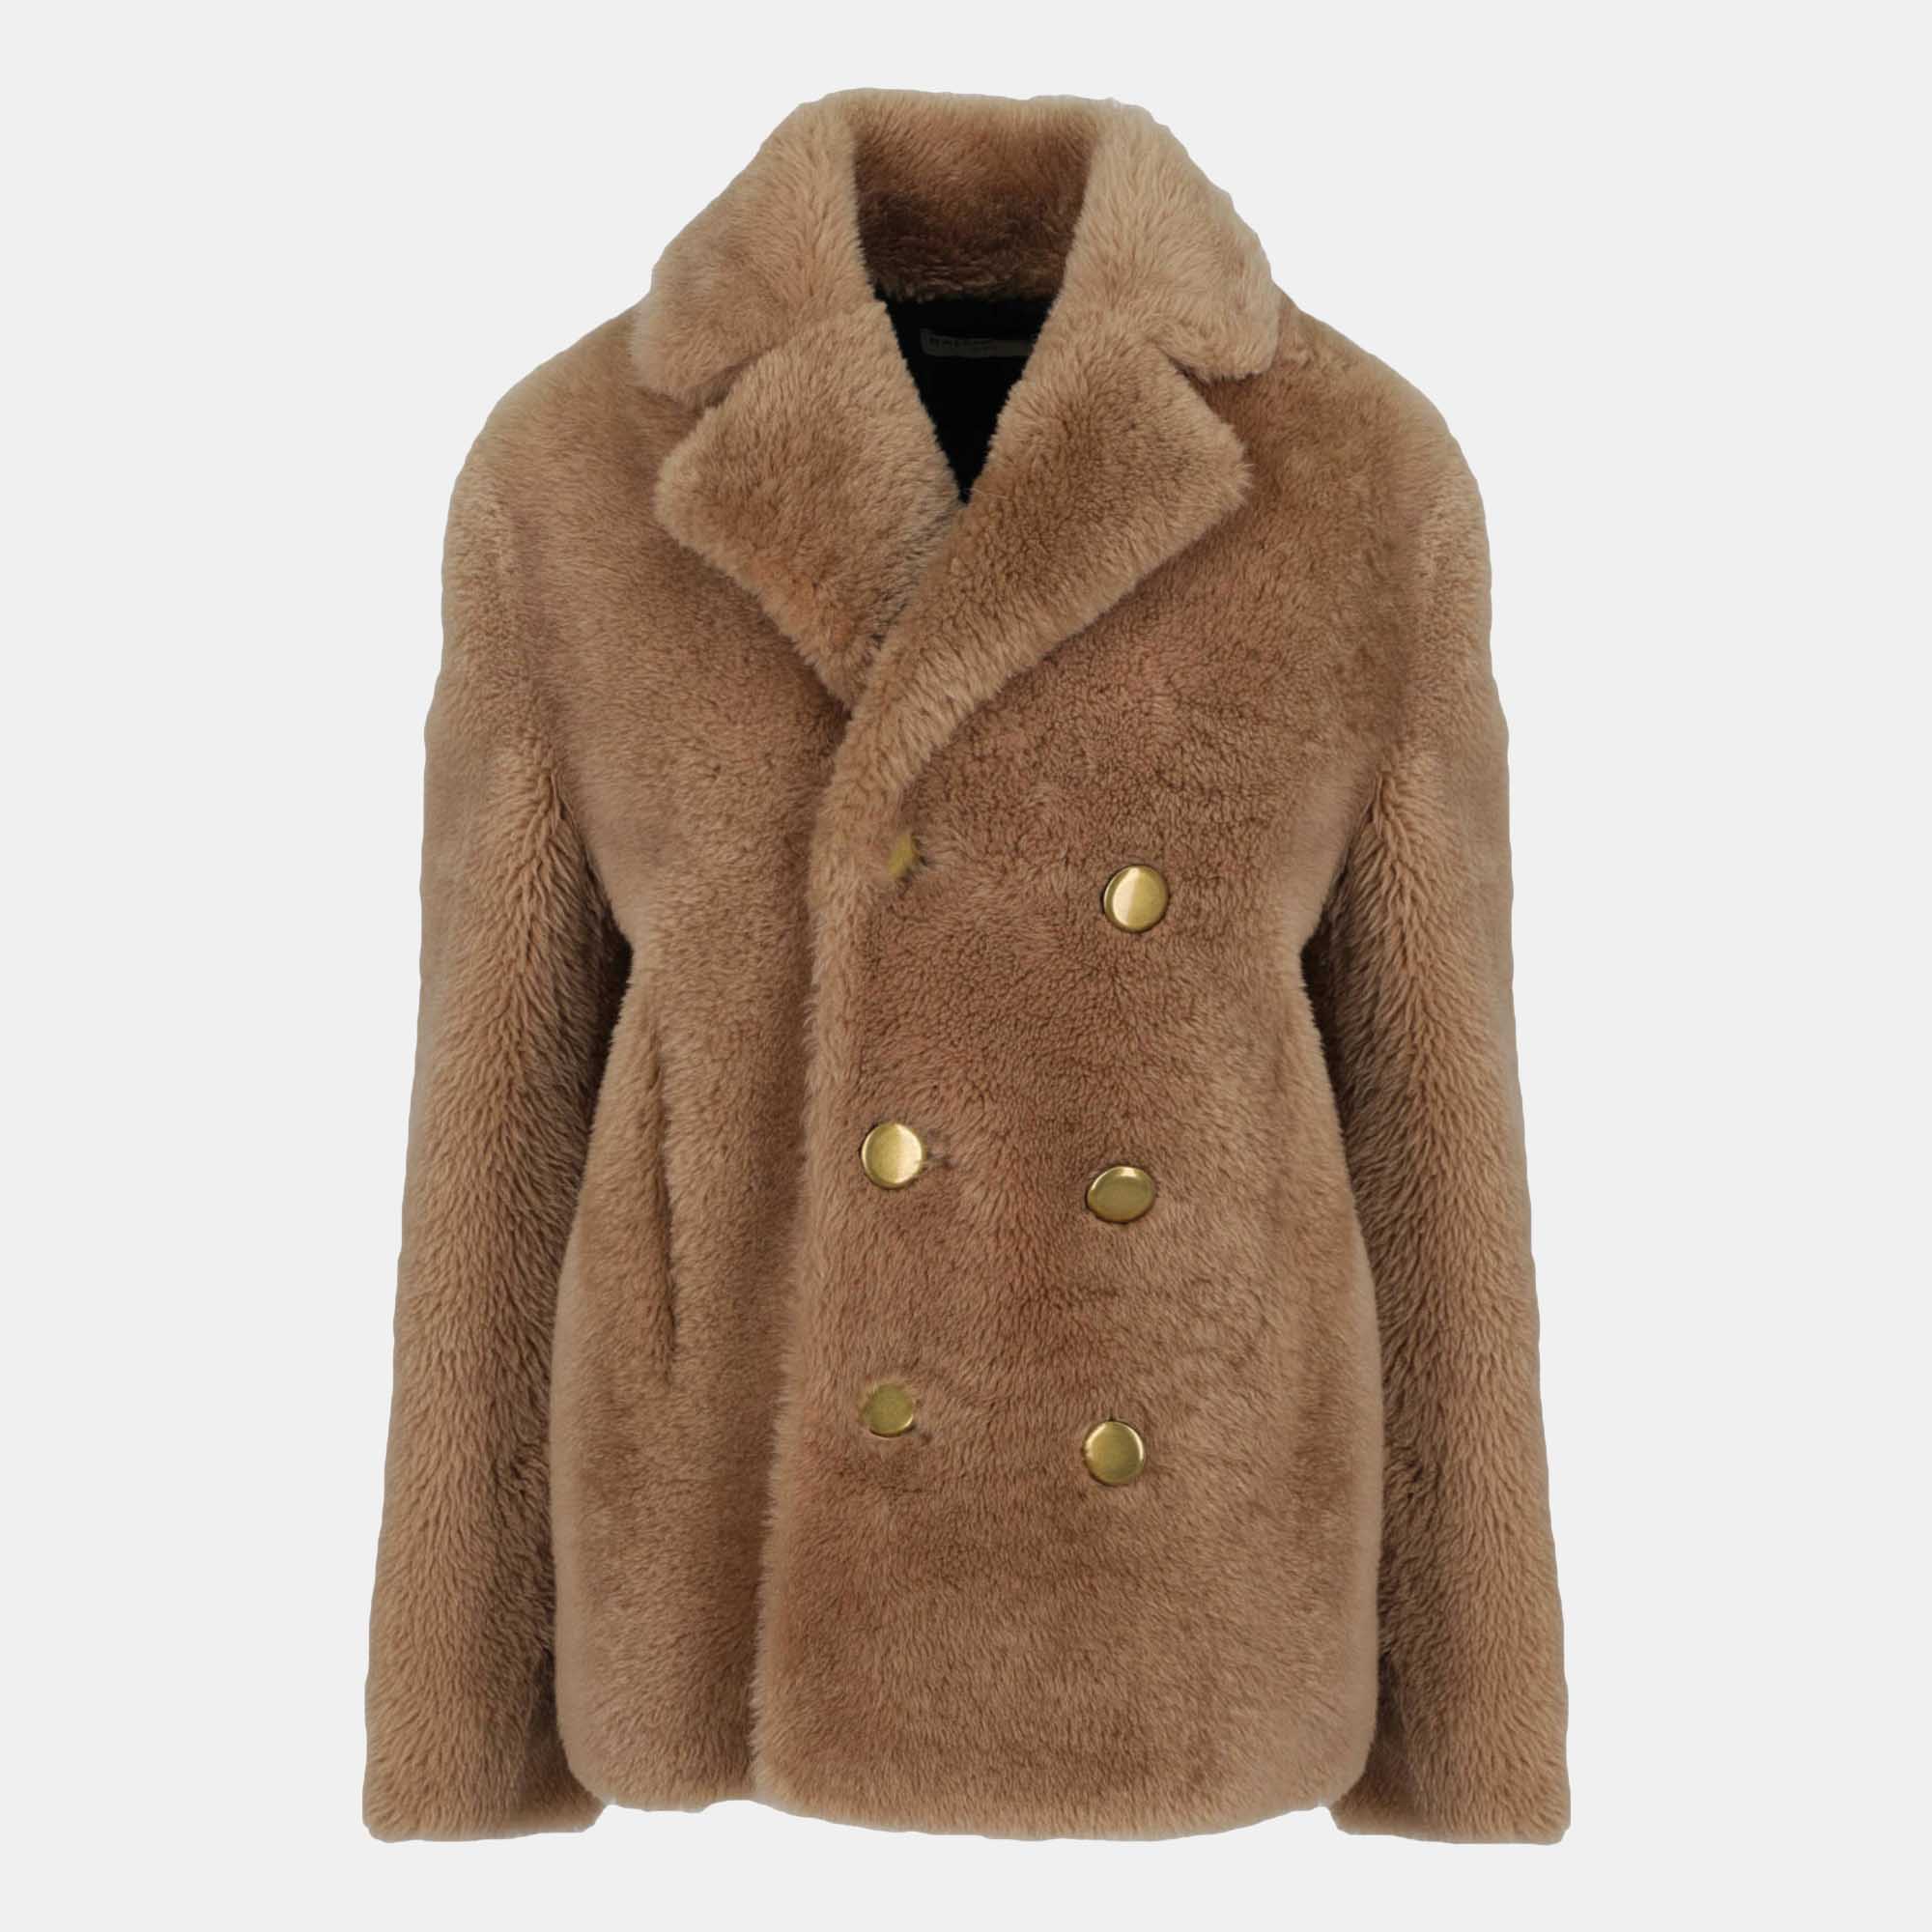 Balenciaga  Women's Leather Fur Coat - Camel Color - M